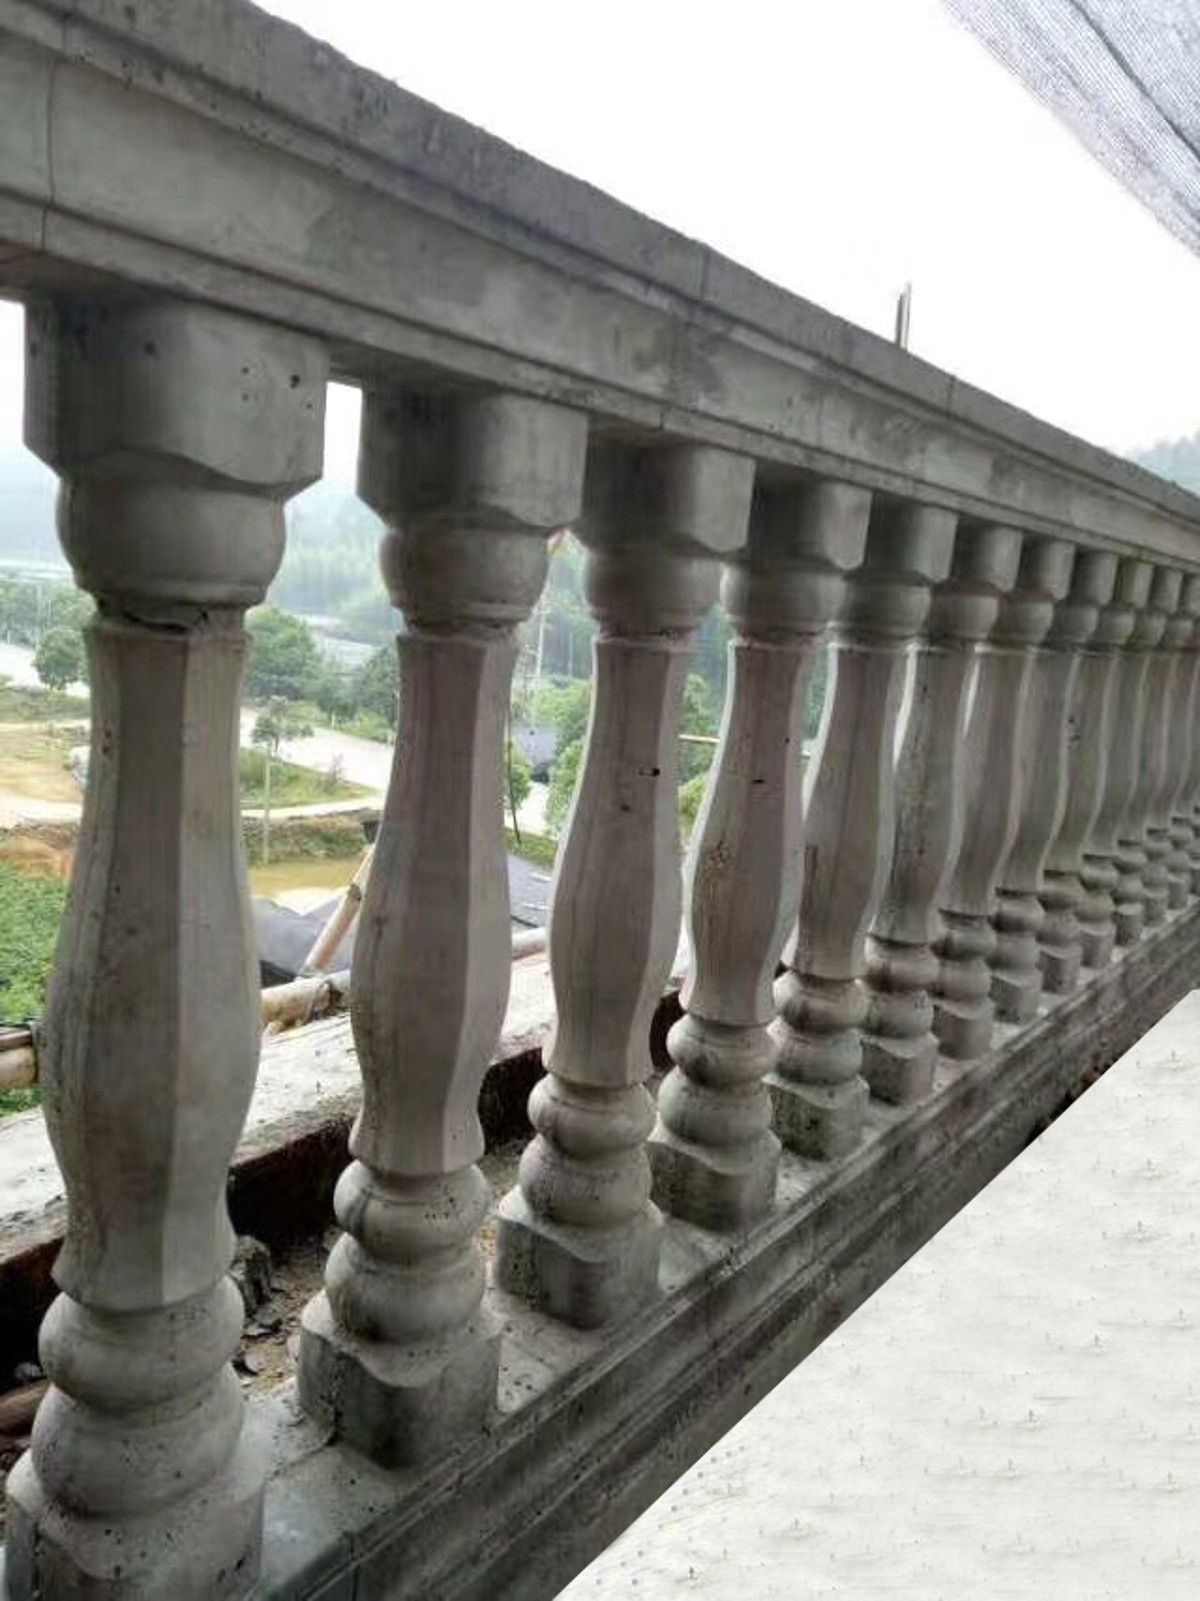 89cm-Roman-Column-Concrete-Plaster-Cement-Casting-Railing-Mould-Balustrade-Mold-1430356